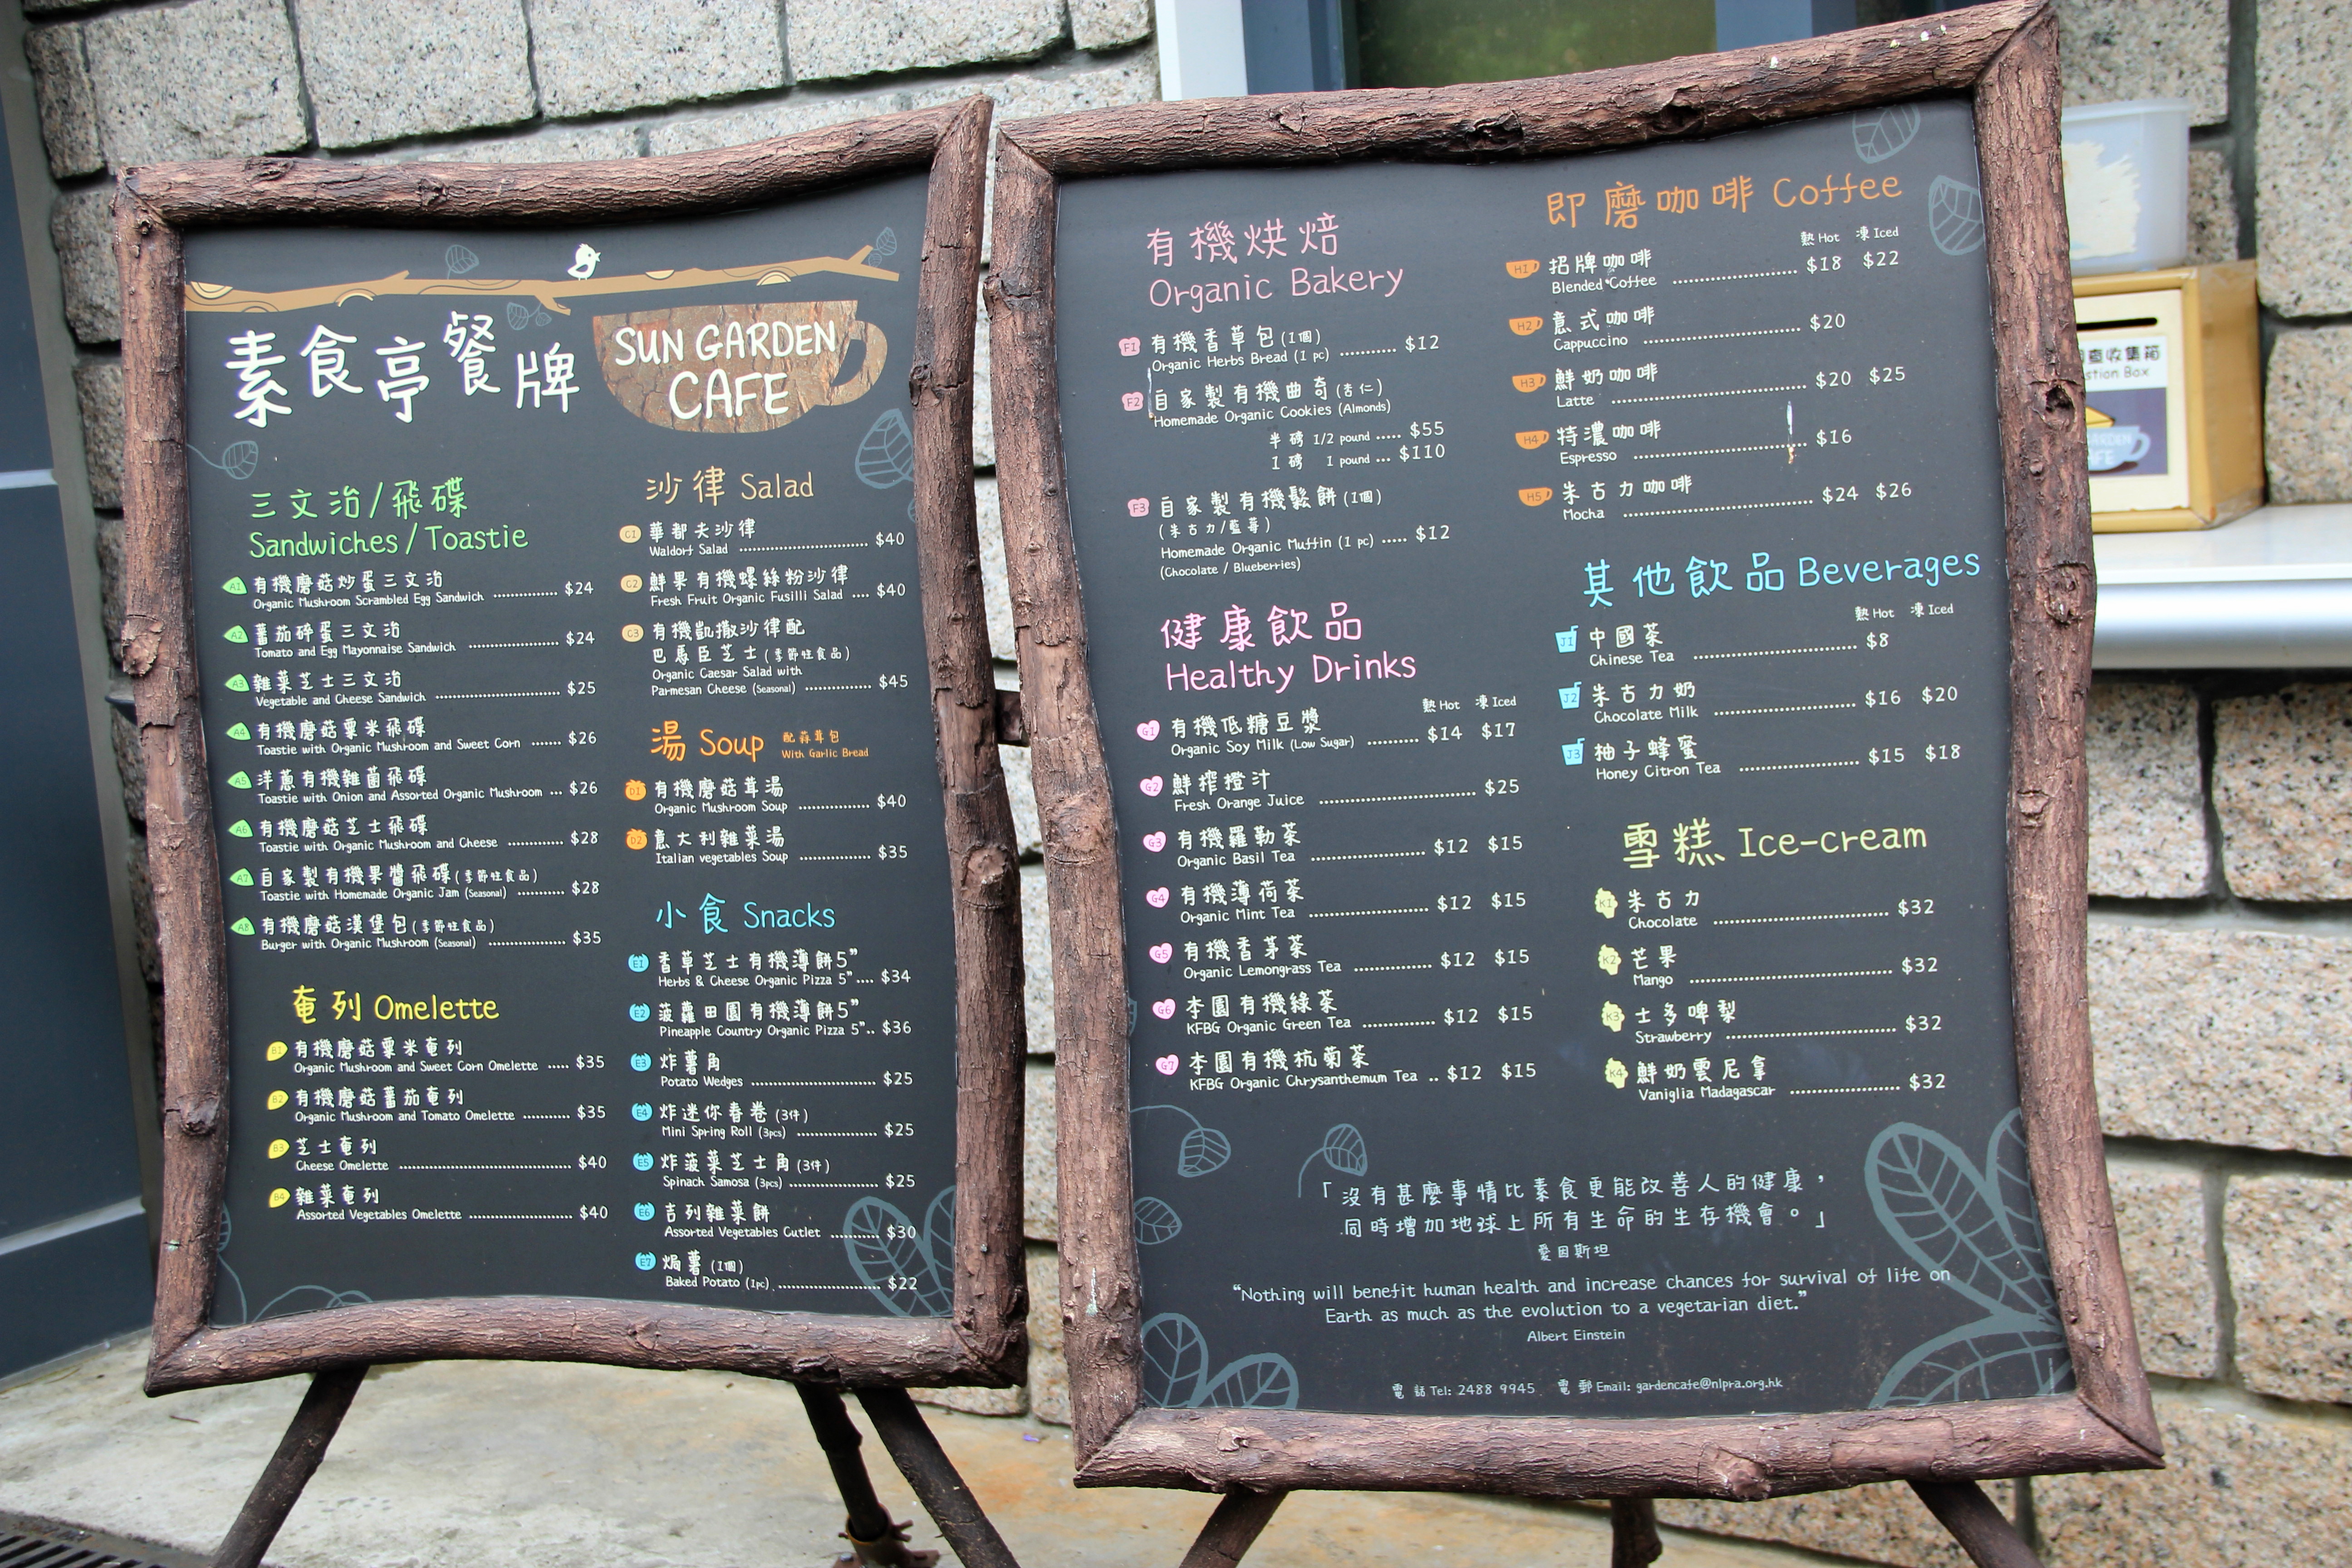 Sun Garden Cafe menu at Kadoorie Farm Botanic Garden, Hong Kong